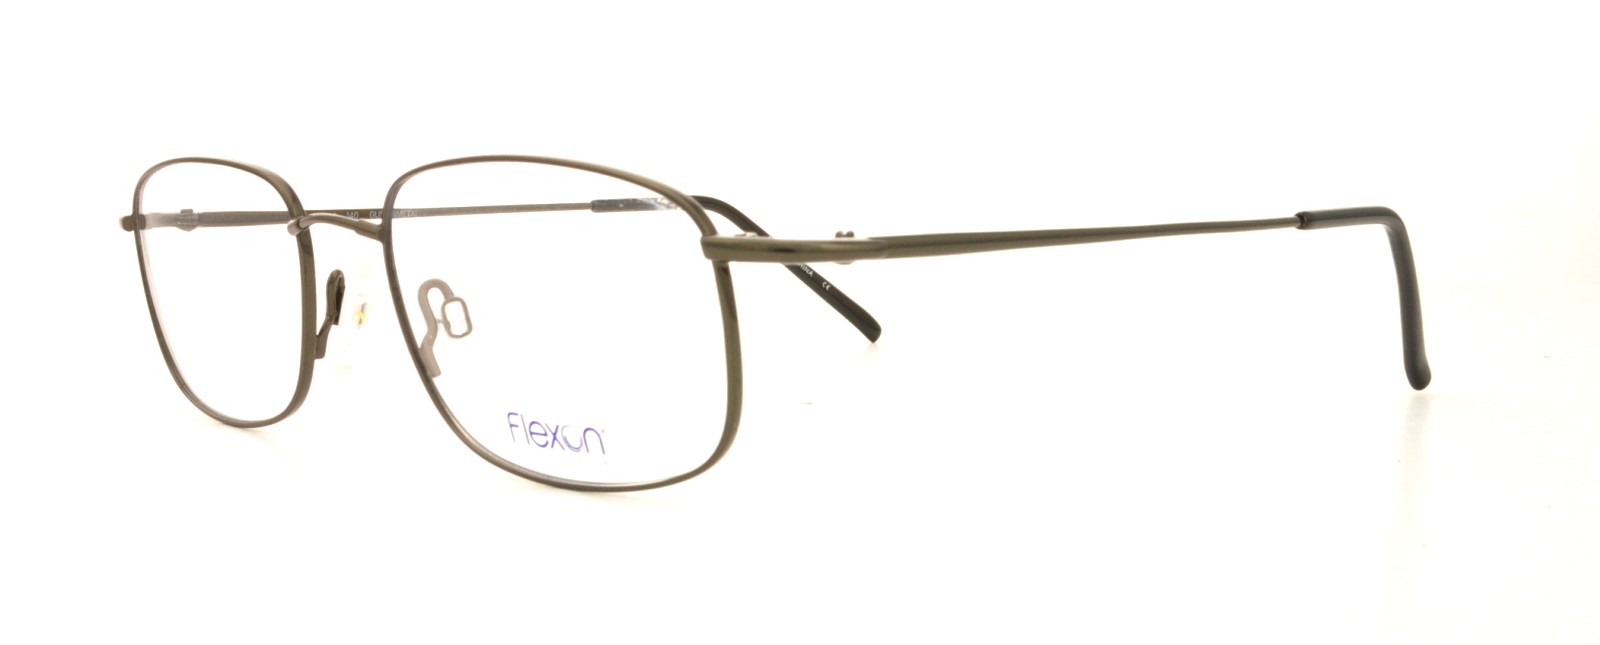 Picture of Flexon Eyeglasses 610